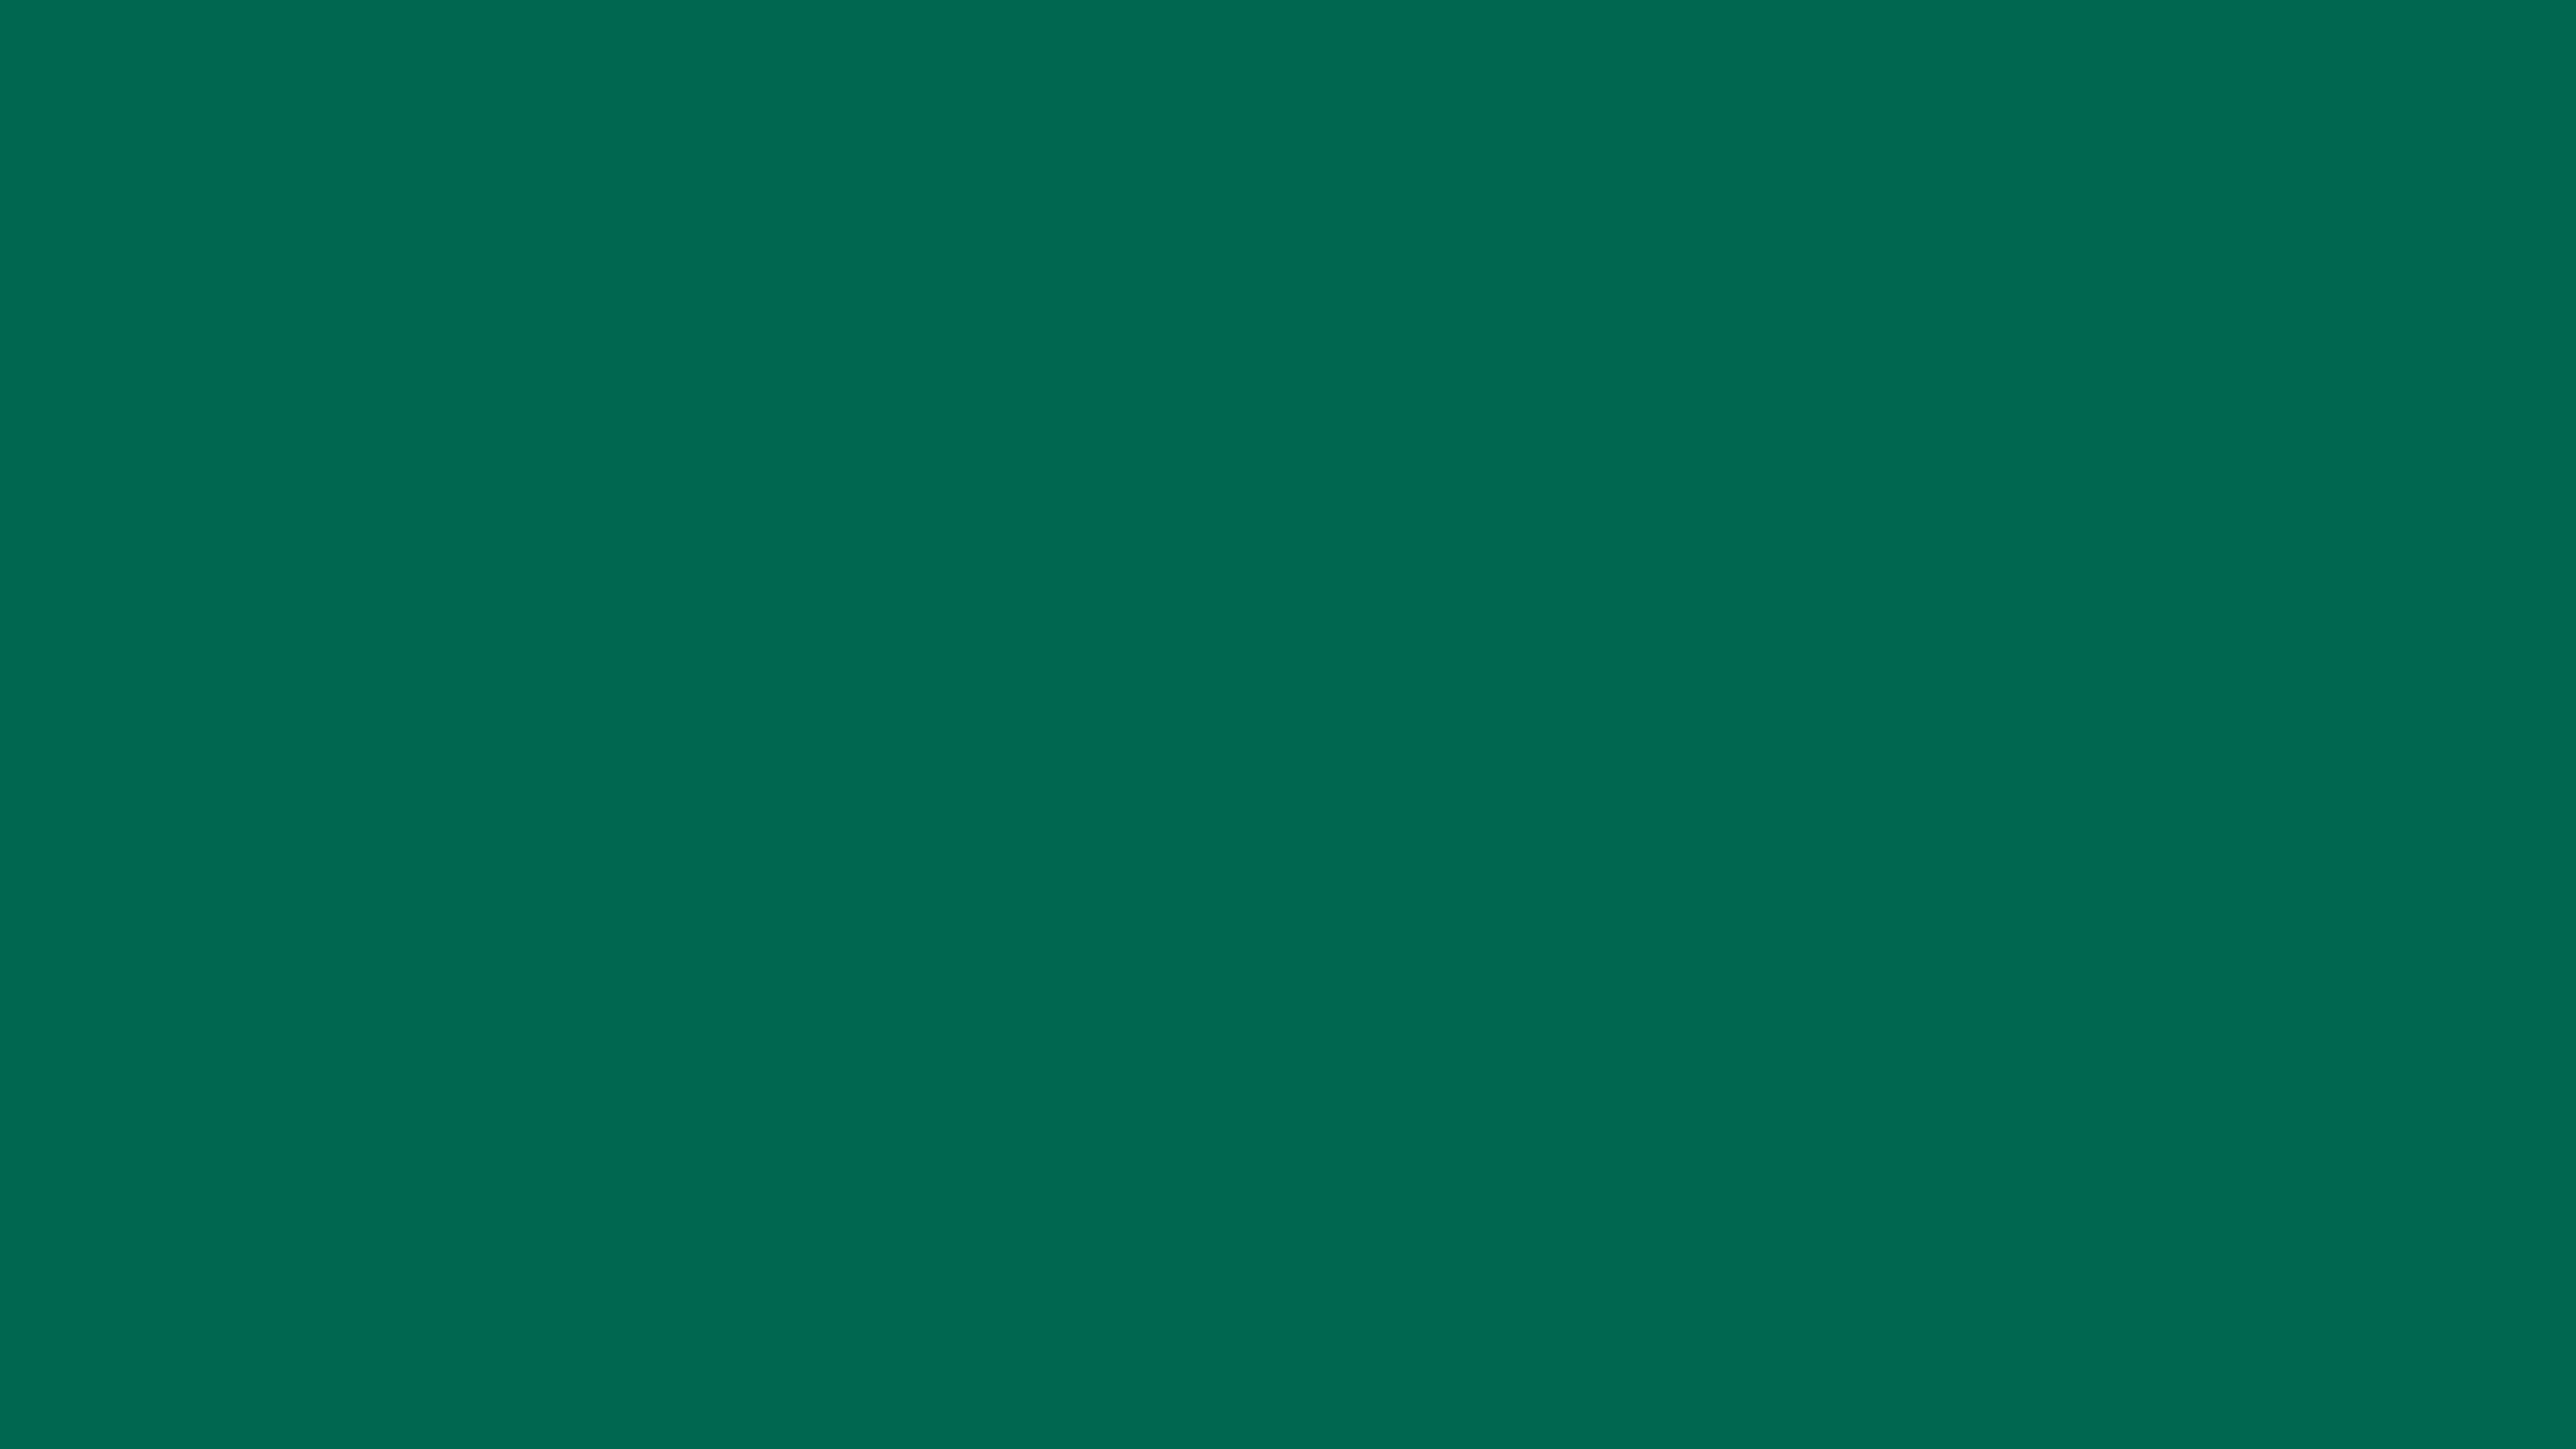 Peacock Green ( similar ) Color | 006750 information | Hsl | Rgb | Pantone